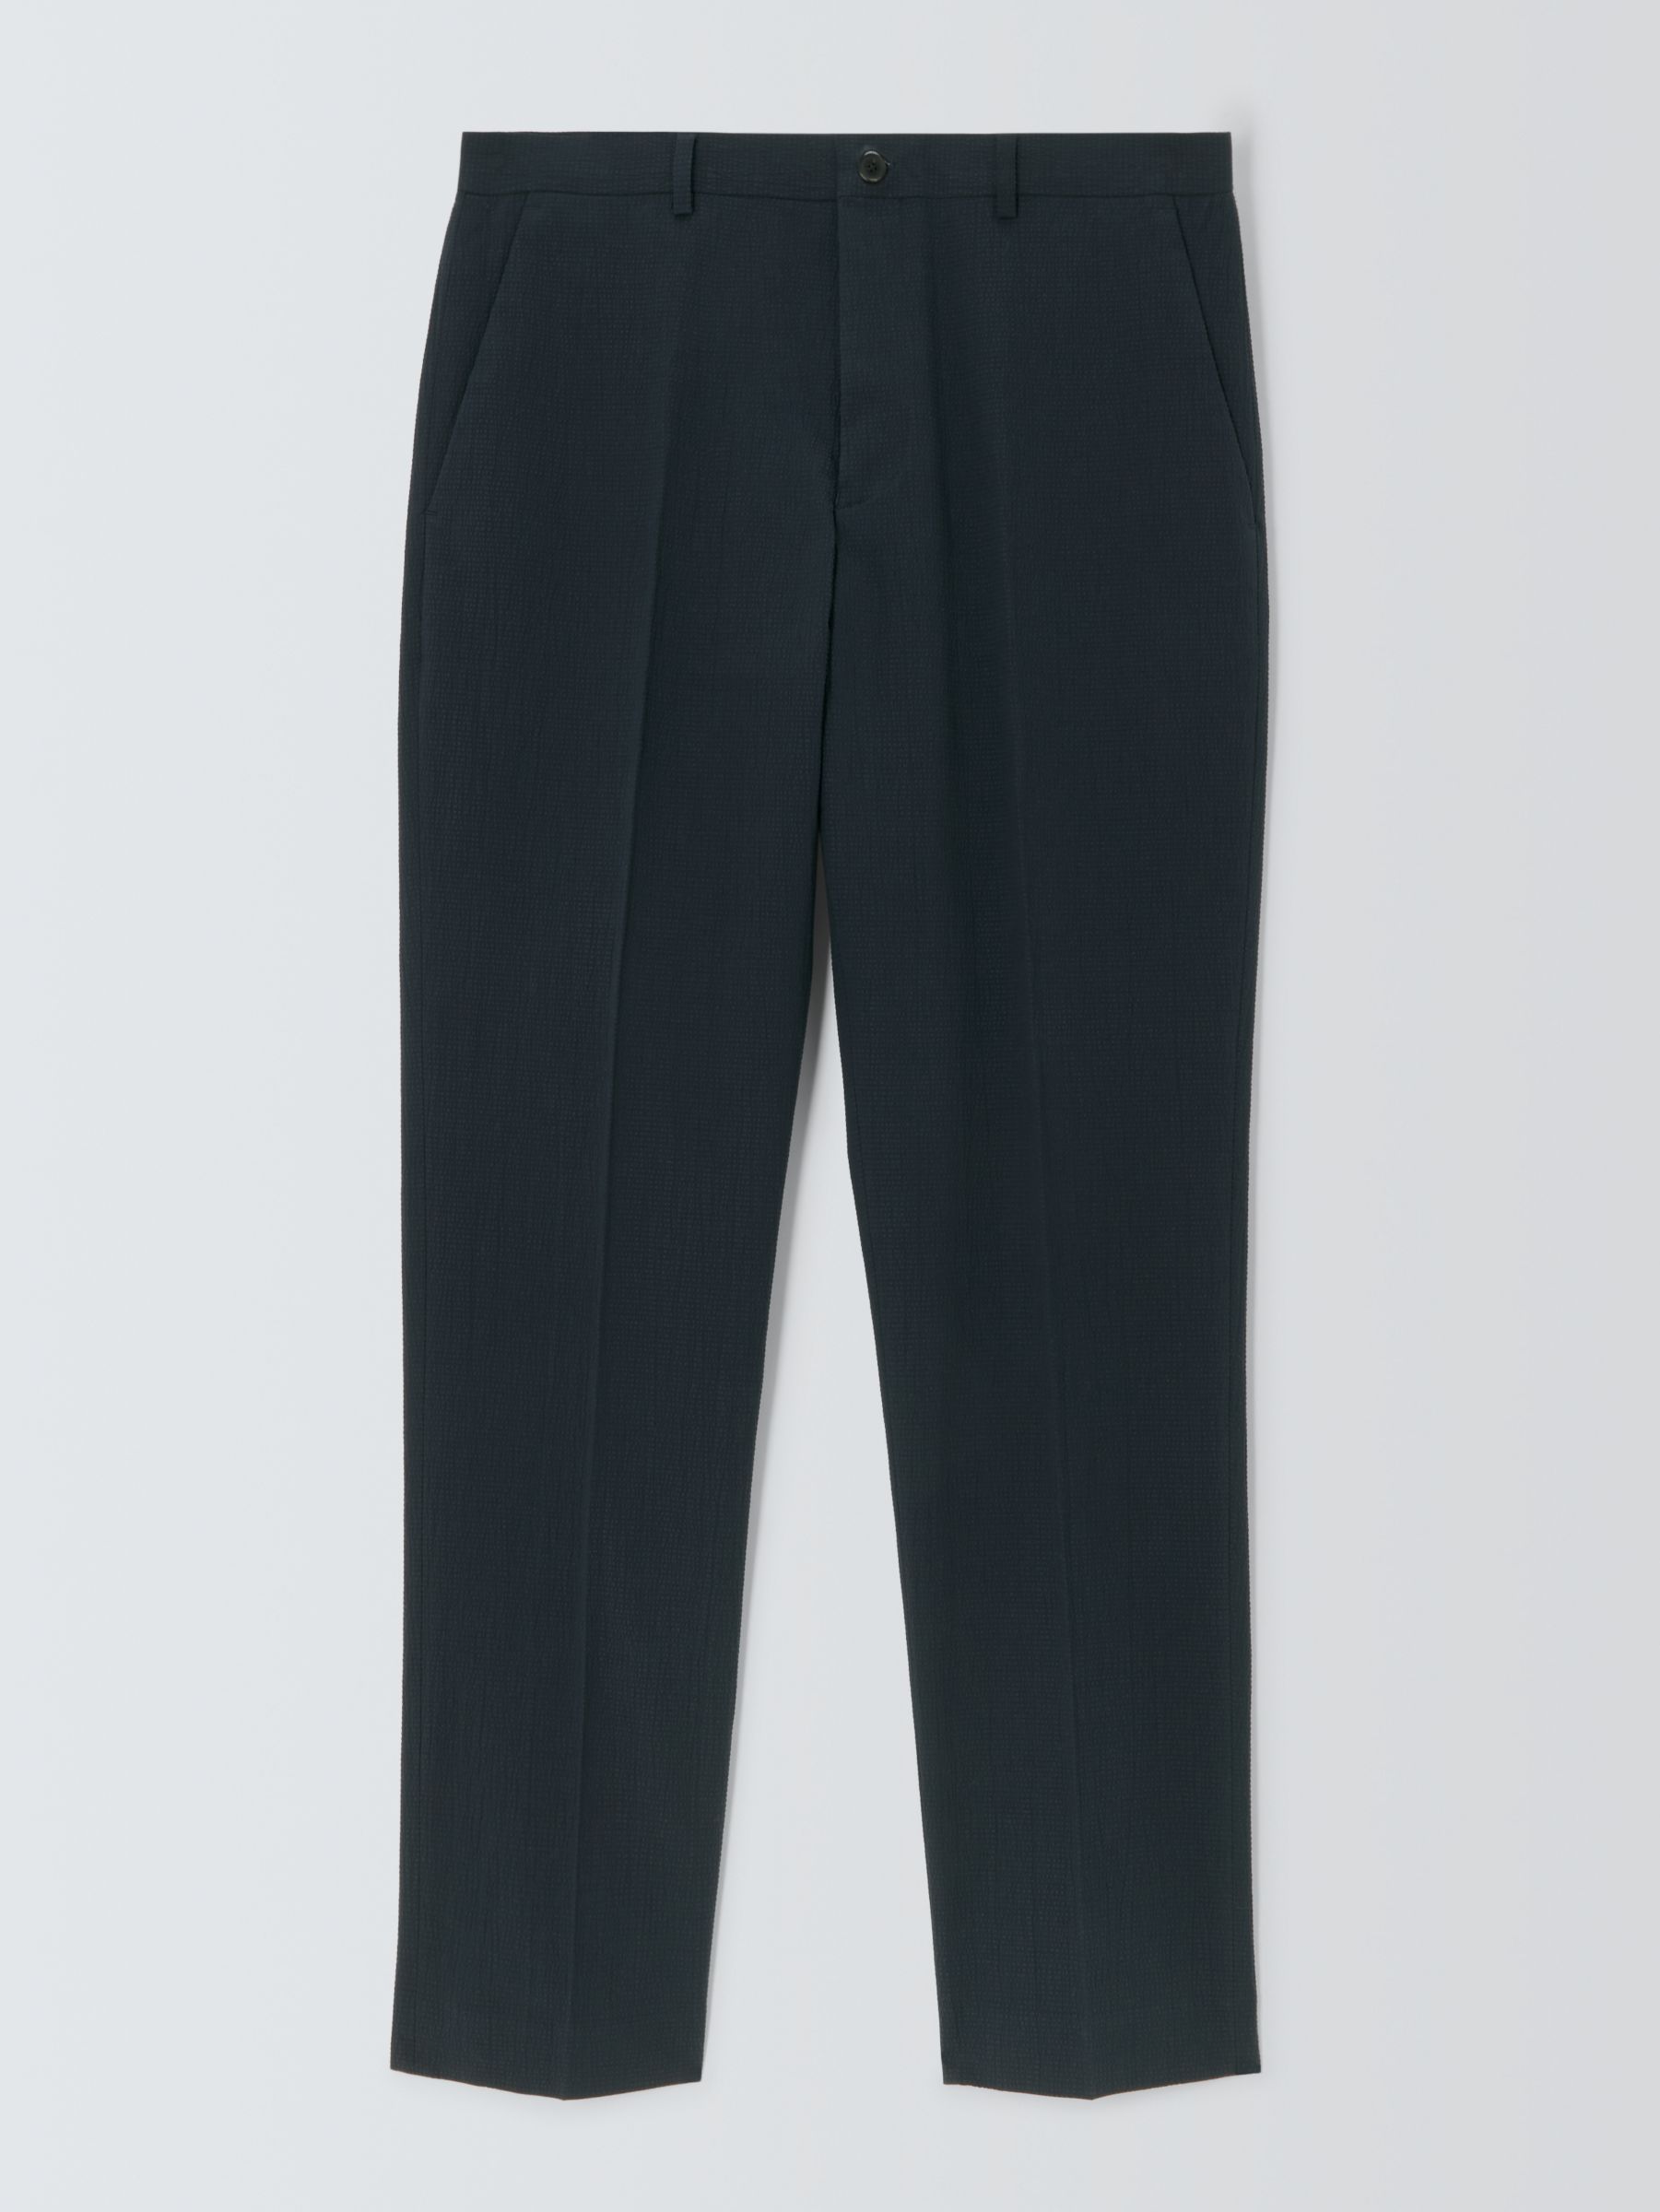 Kin Asher Cotton Seersucker Slim Fit Suit Trousers, Navy, 34S